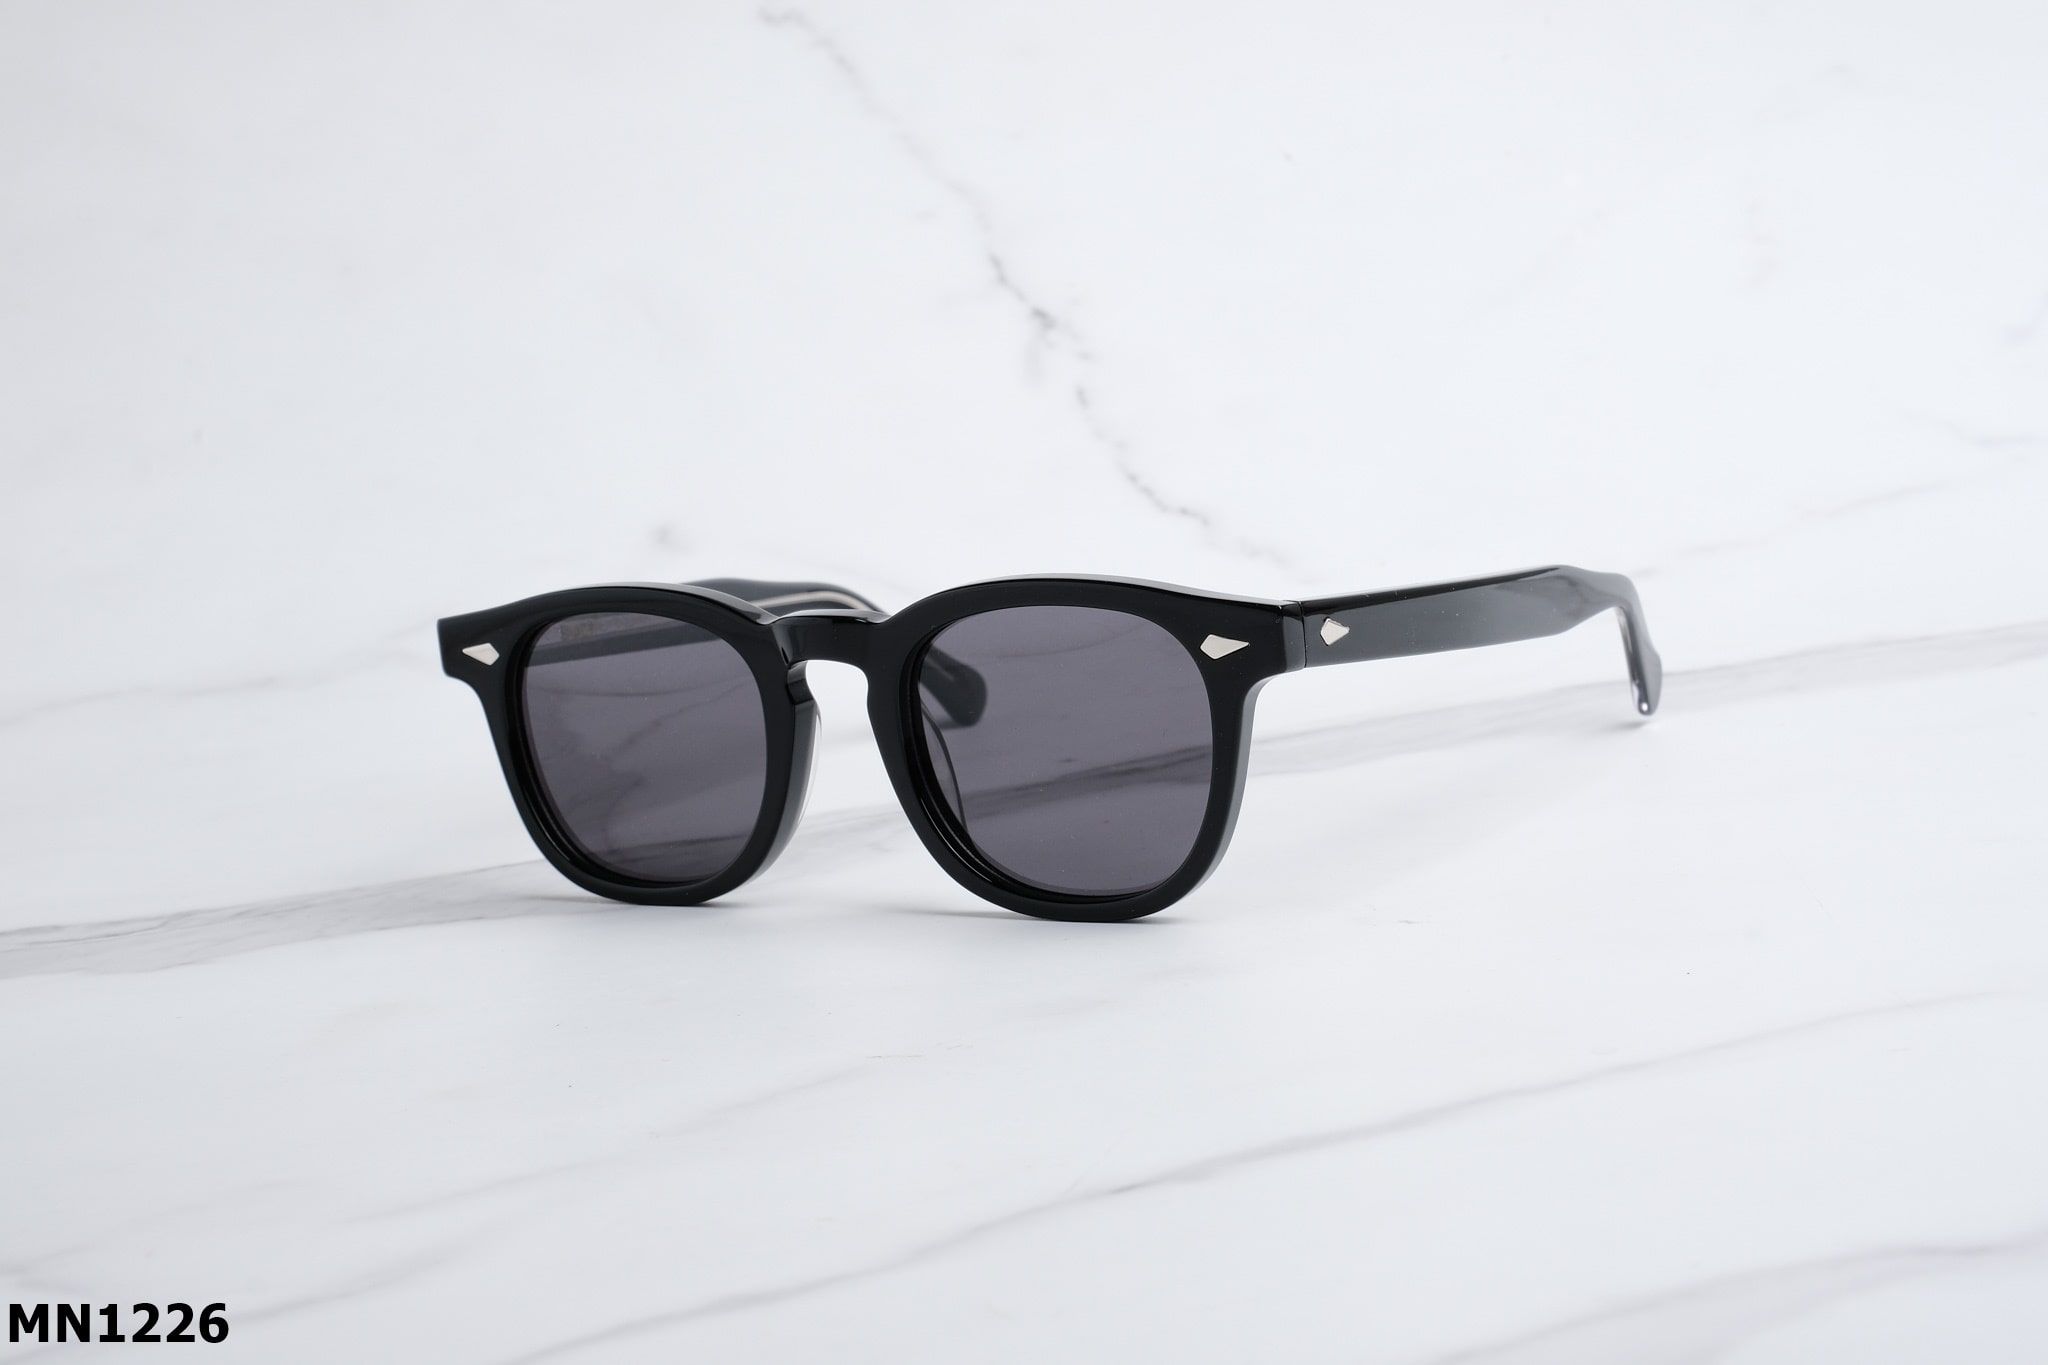  SHADY Eyewear - Sunglasses - MN1226 